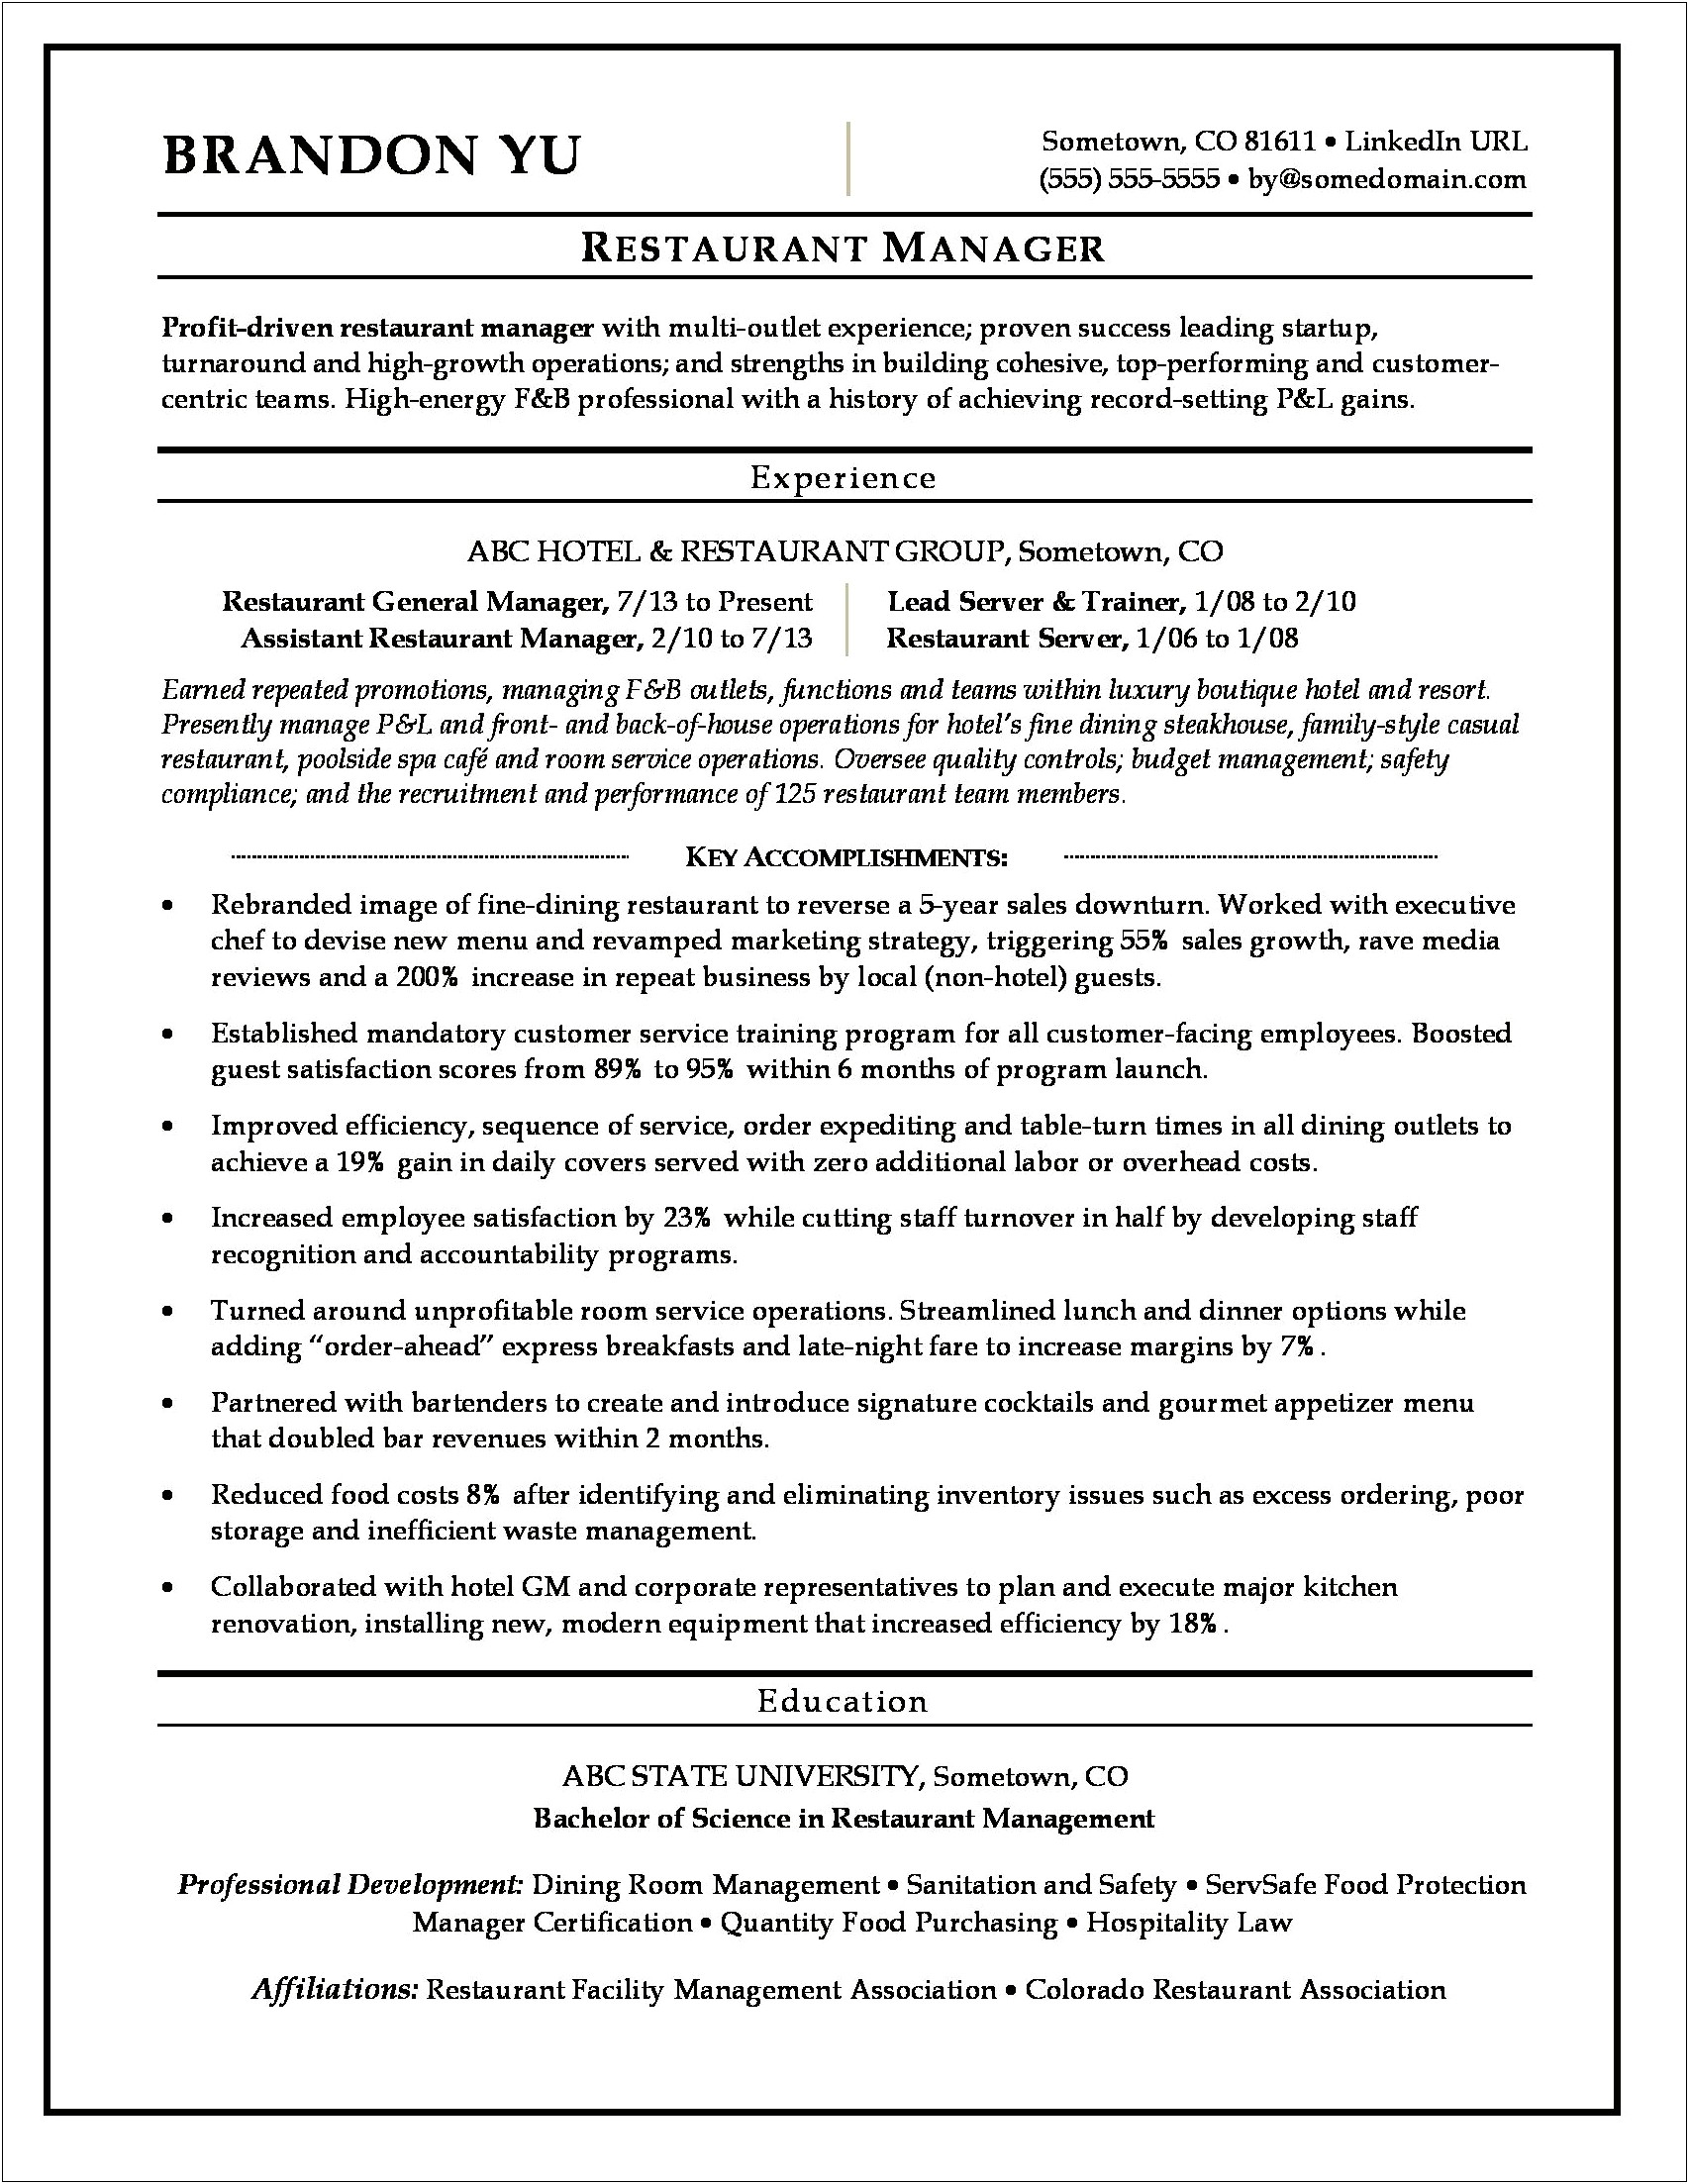 Resume Format For General Manager Post